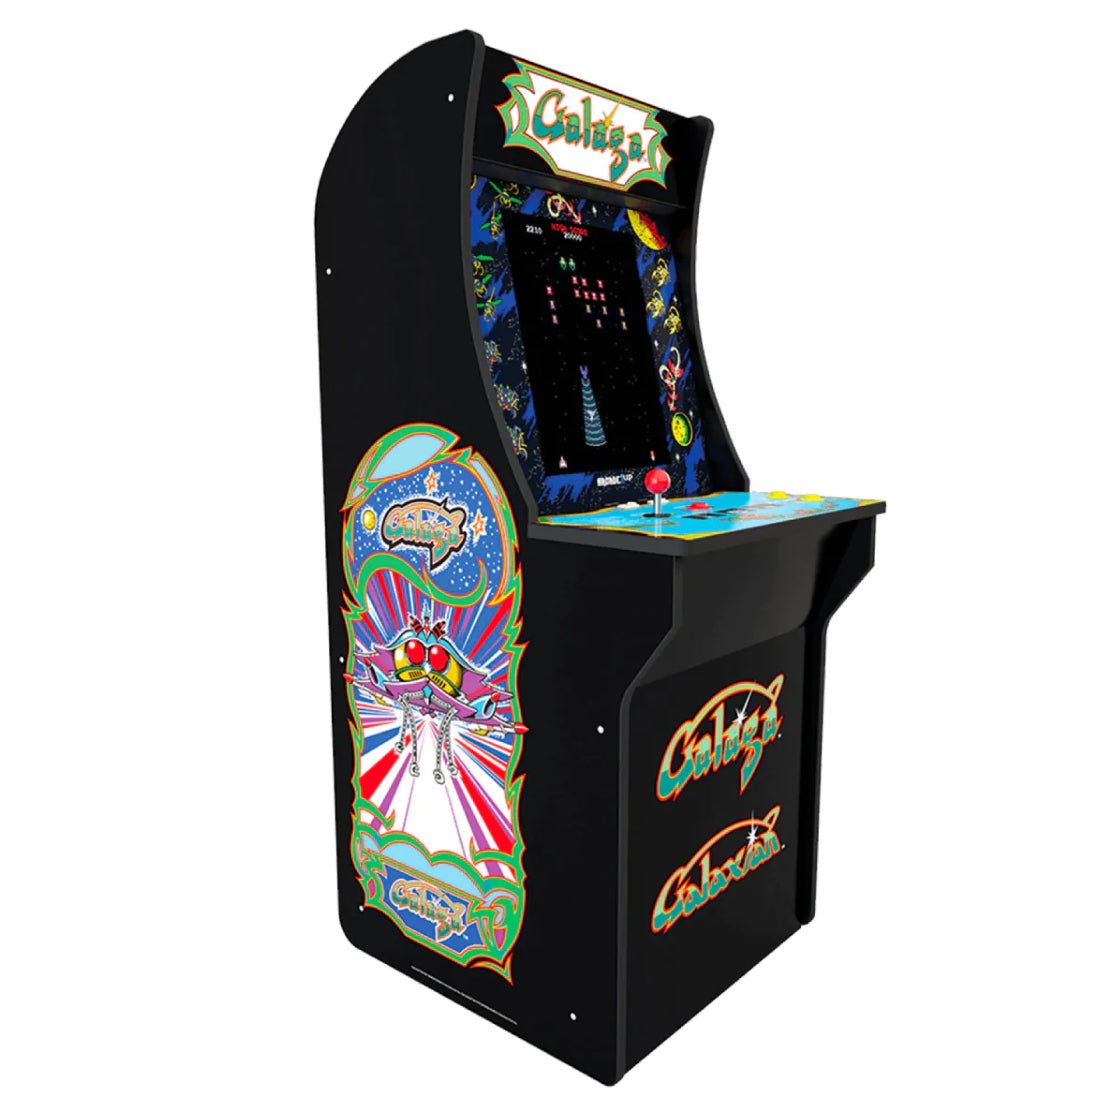 Arcade1up Galaga Arcade Machine - Store 974 | ستور ٩٧٤